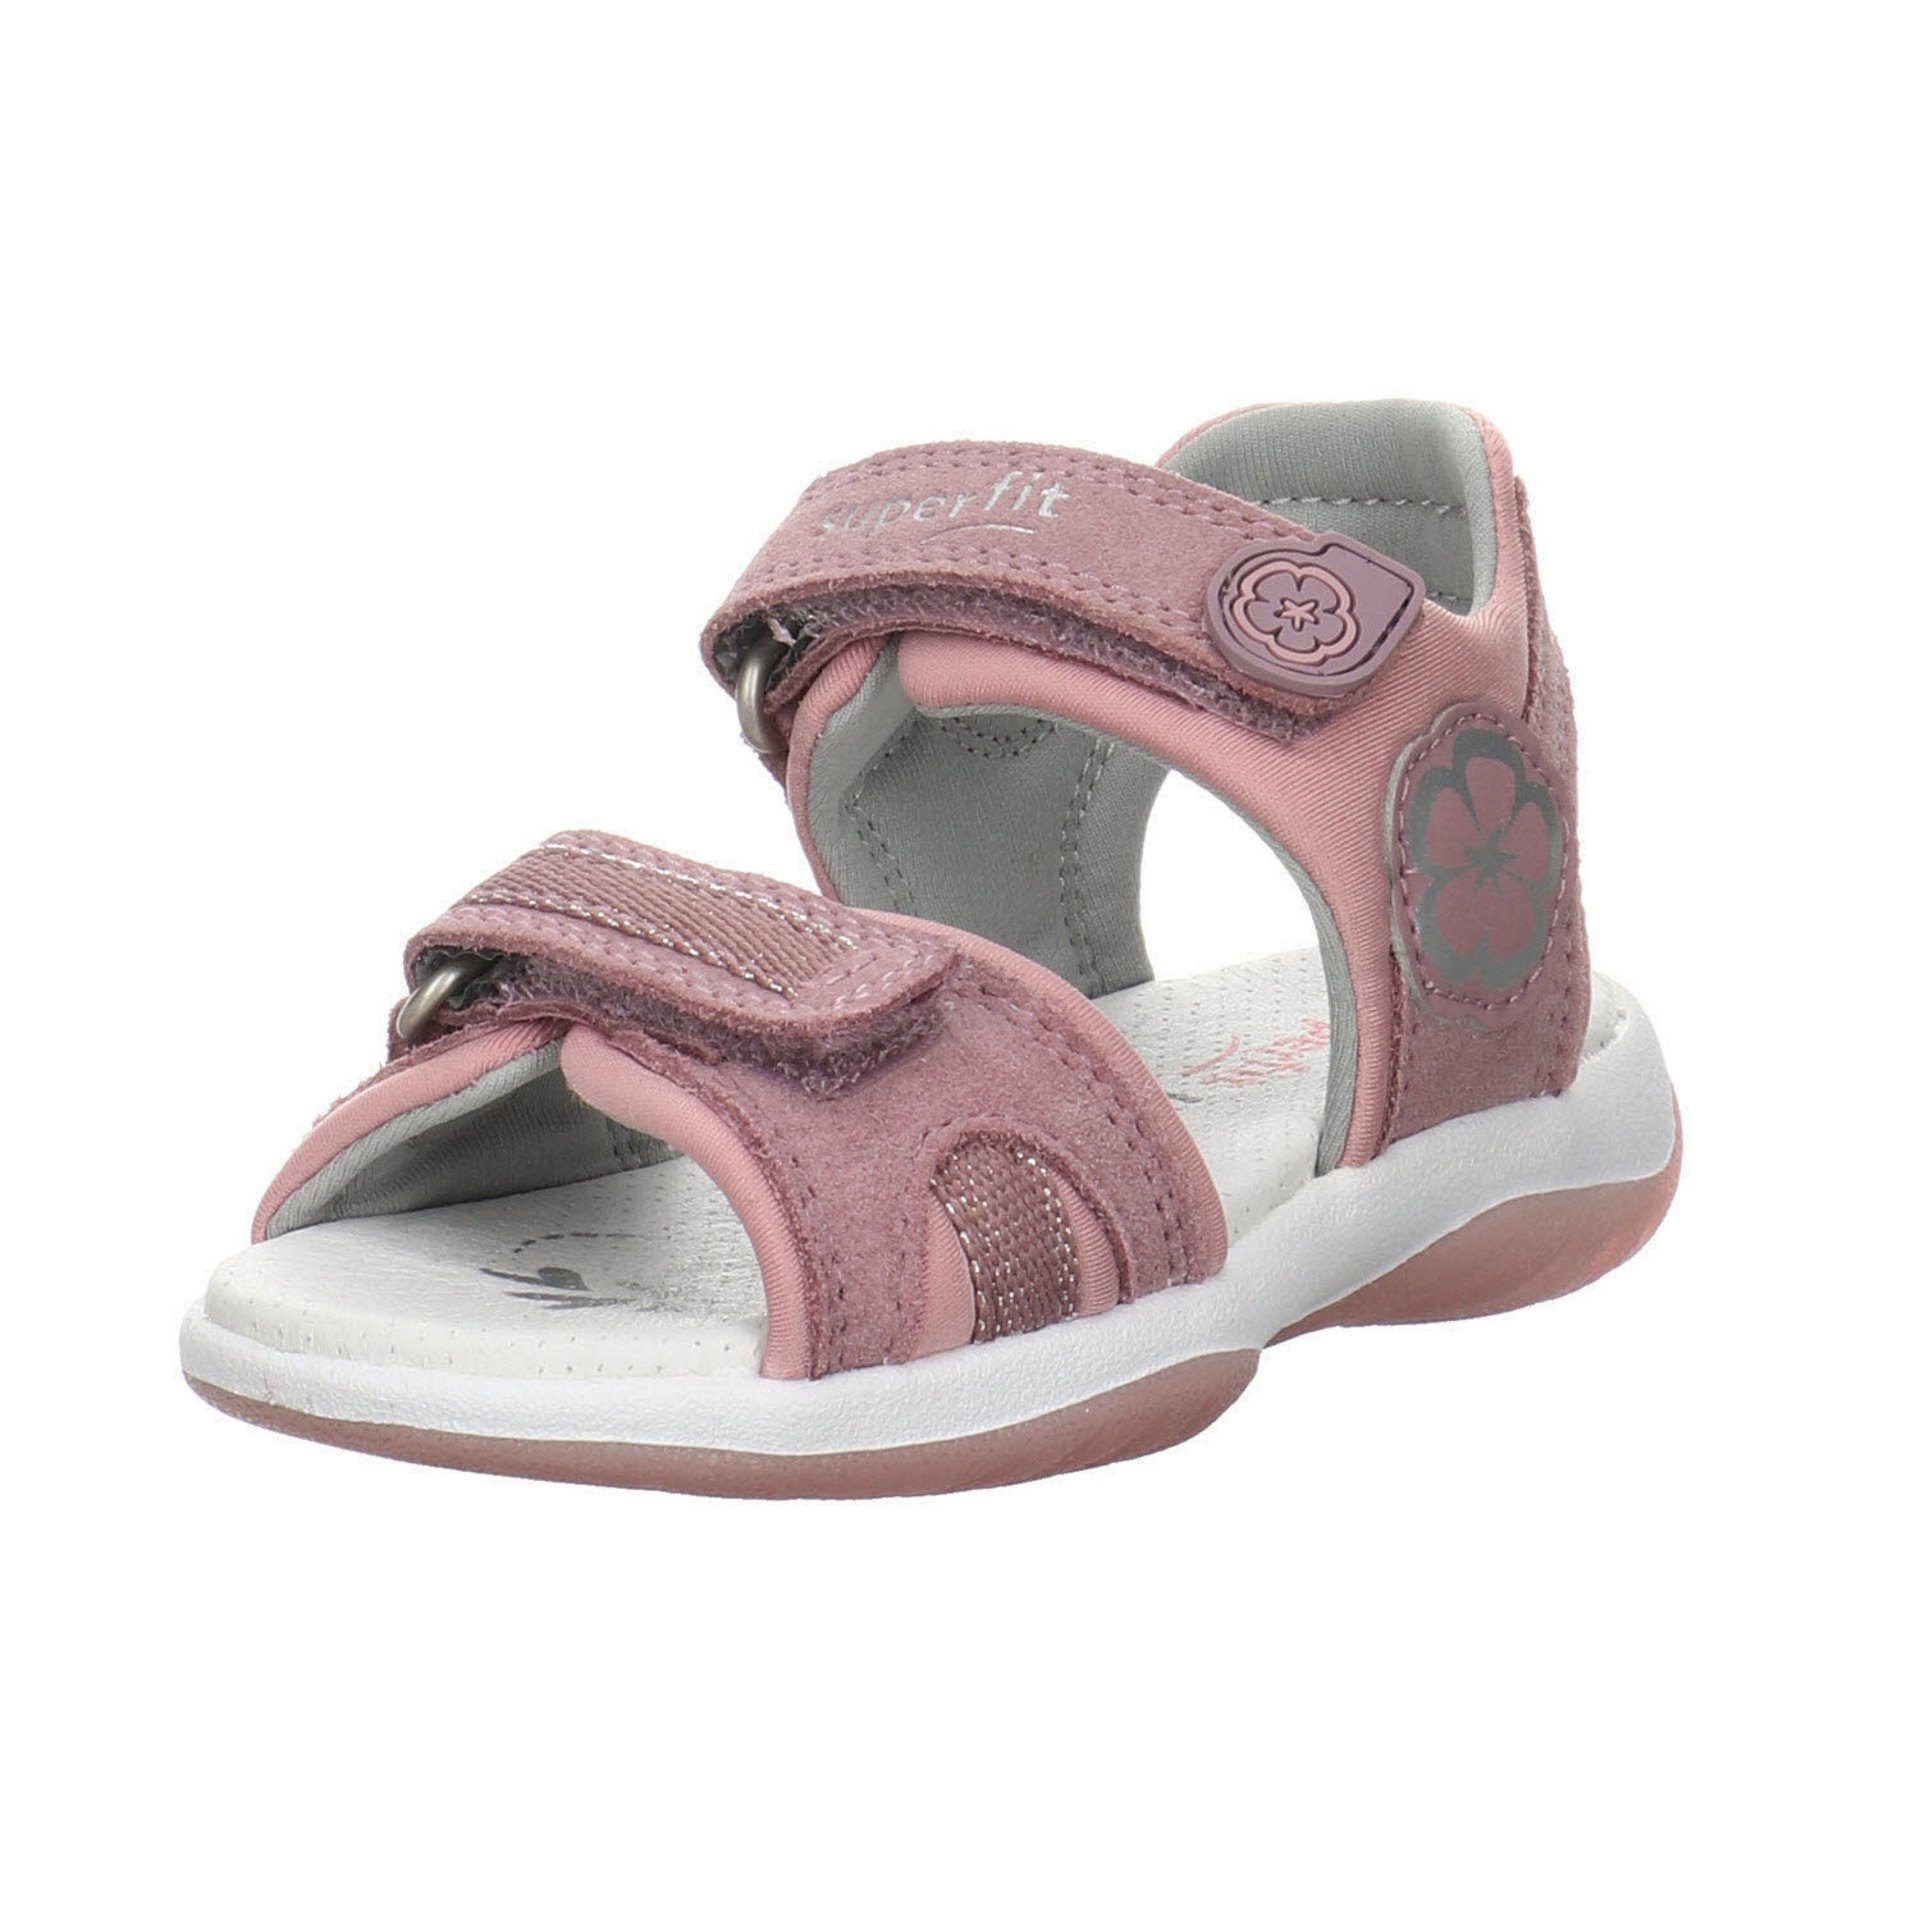 Superfit Mädchen Sandalen Schuhe Sunny Sandale Kinderschuhe Sandale Leder-/Textilkombination Rosa (20401807)